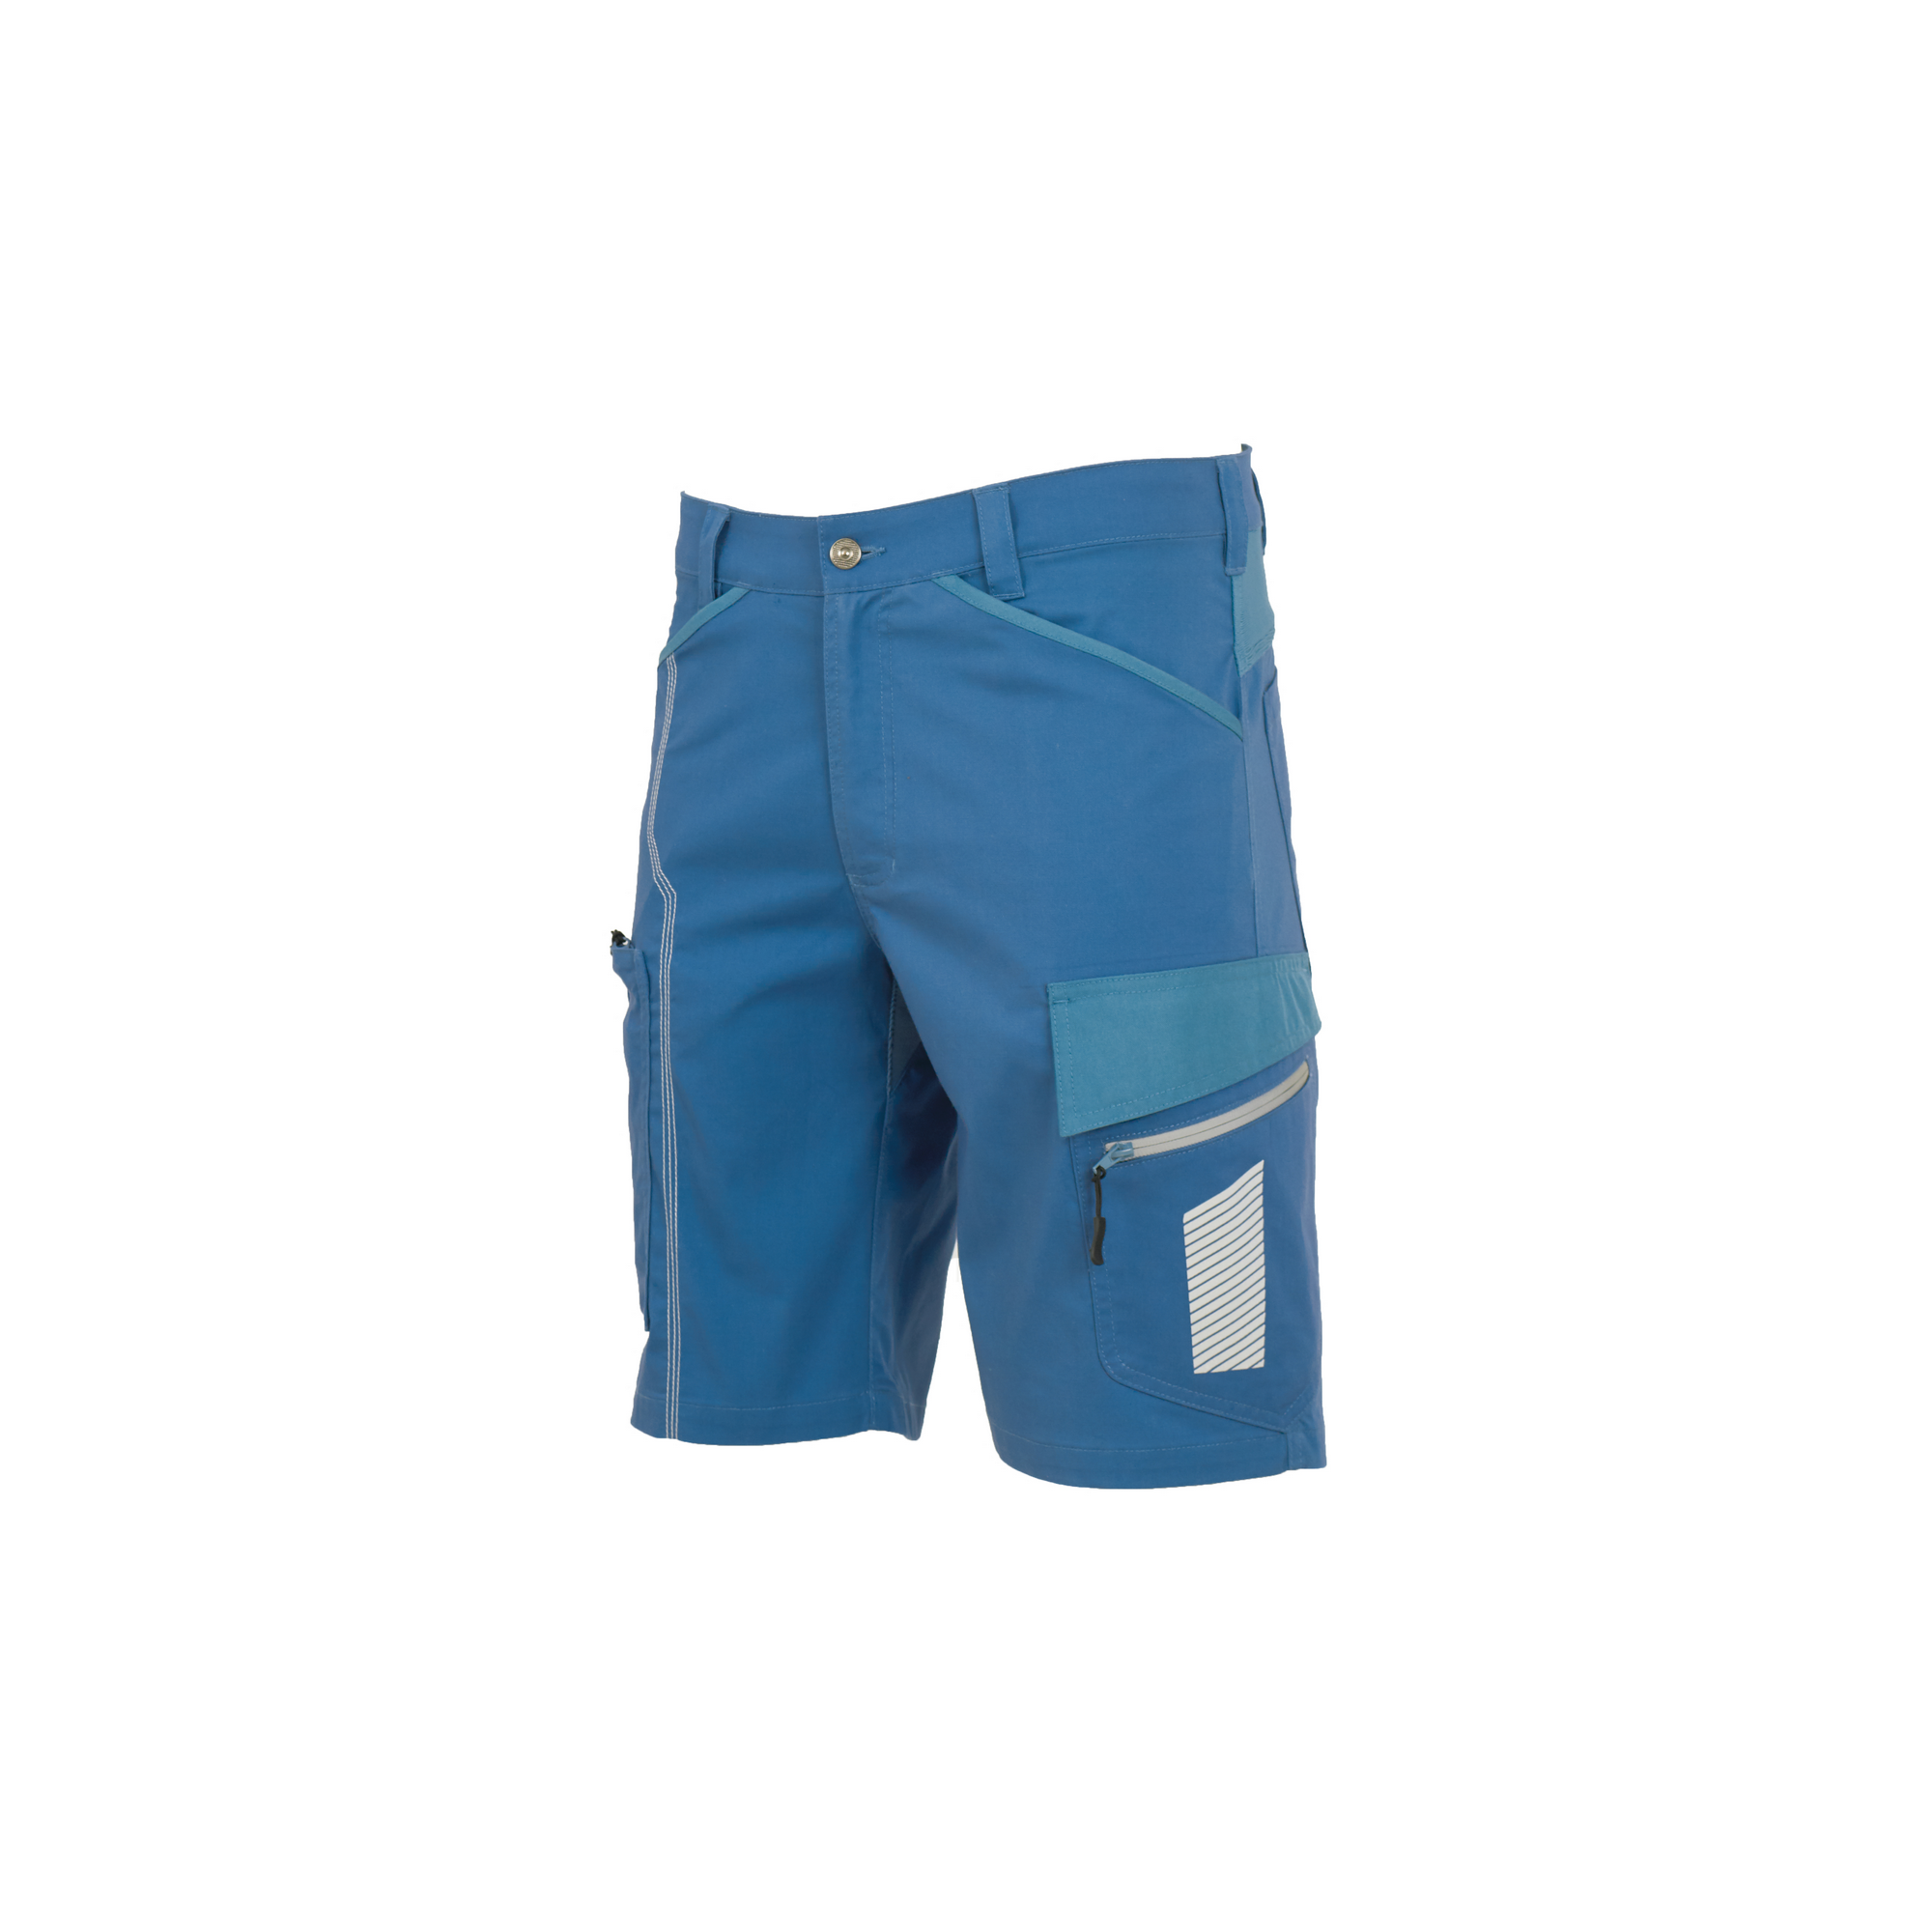 Shorts 'Taurus' blau 52 + product picture